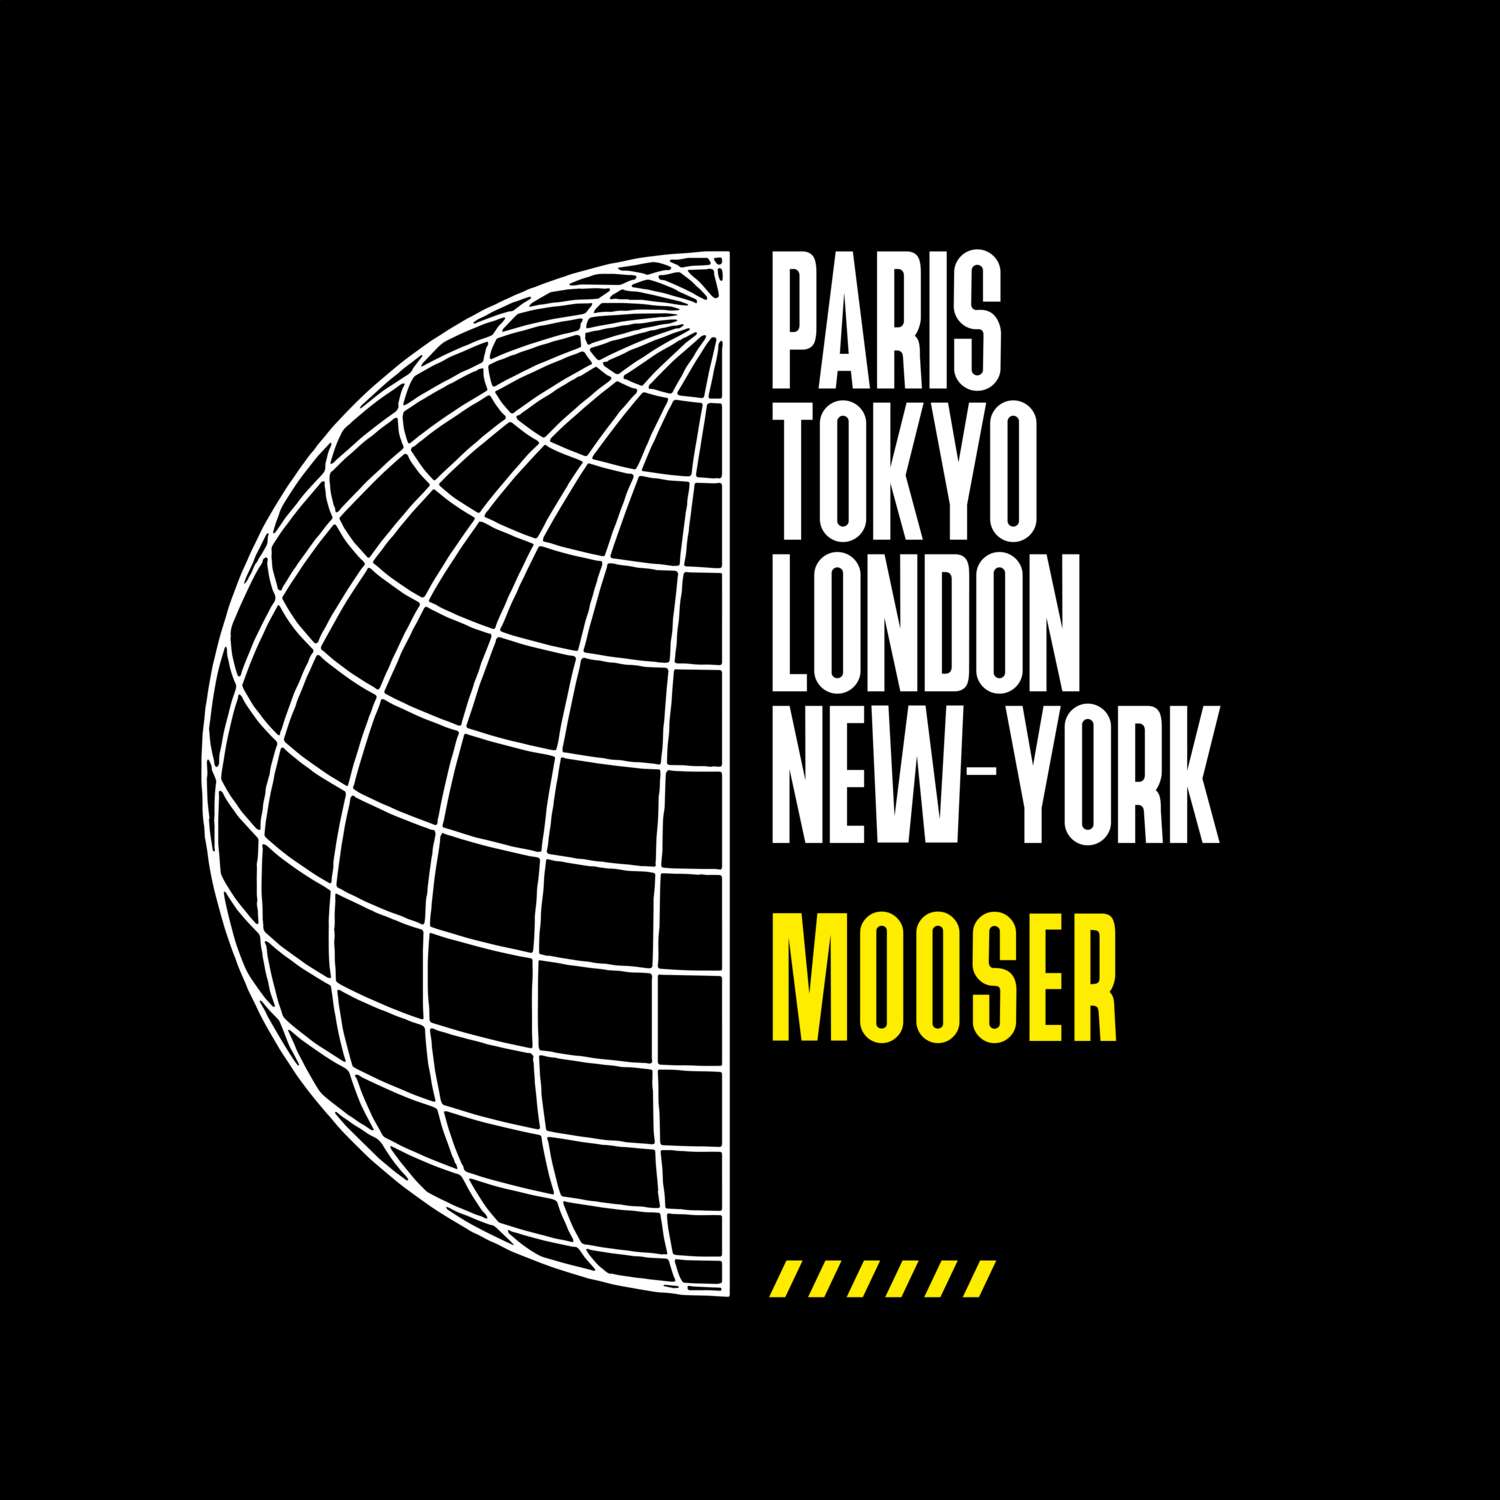 Mooser T-Shirt »Paris Tokyo London«